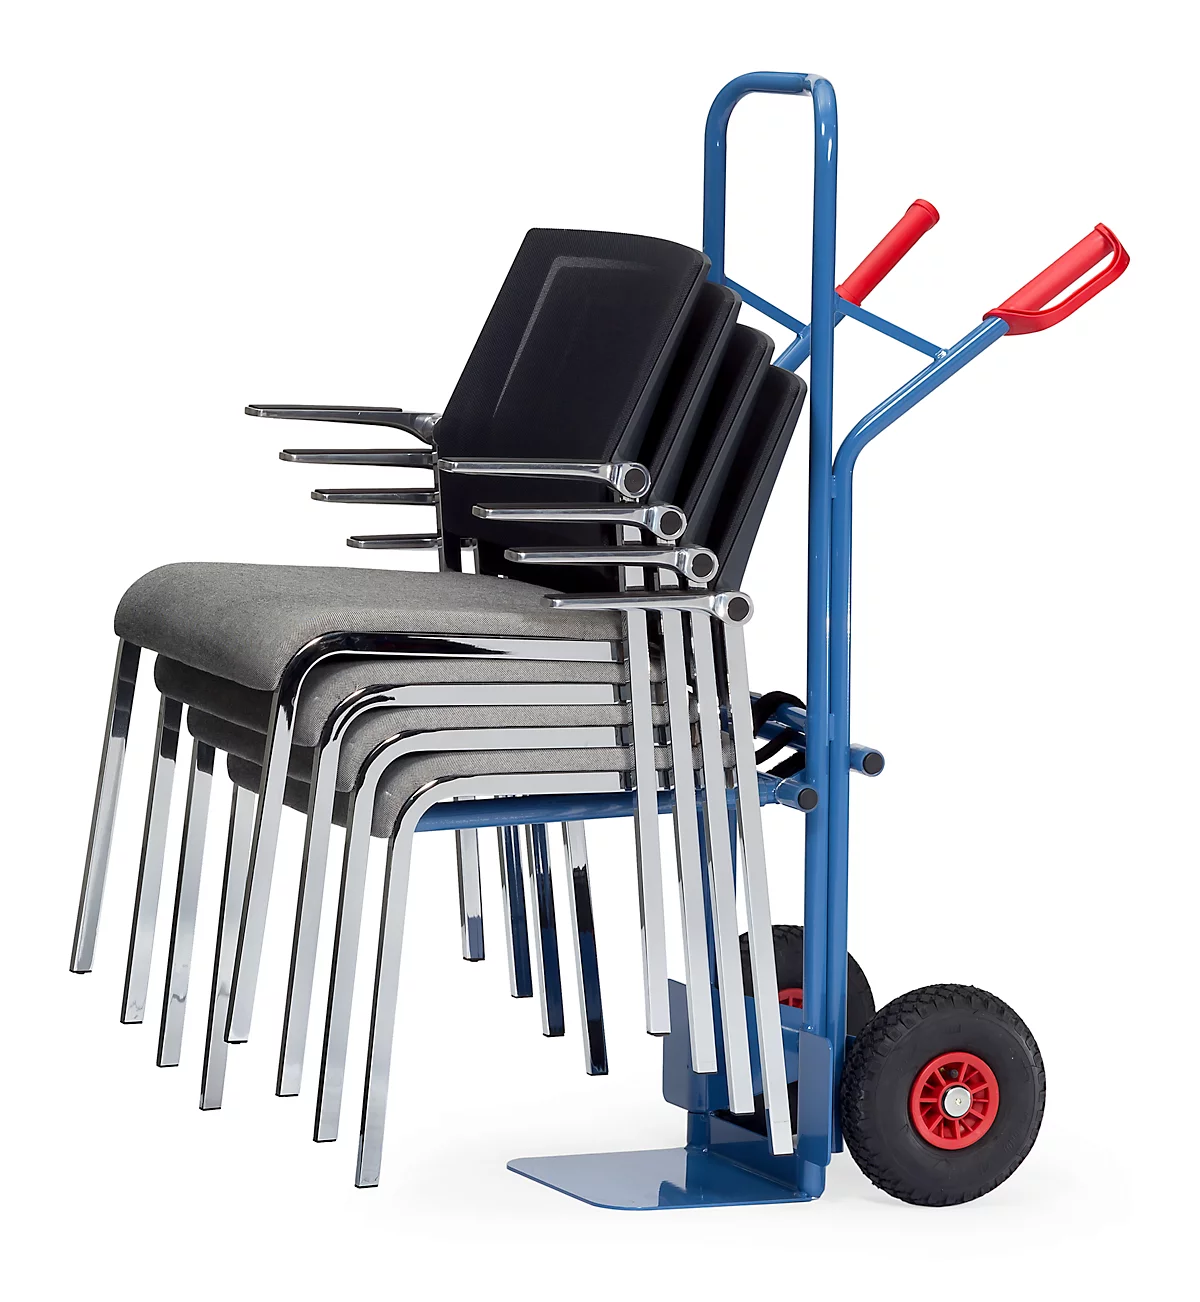 Carretilla para sillas/camión apilador, carga máx. 300 kg, ruedas neumáticas